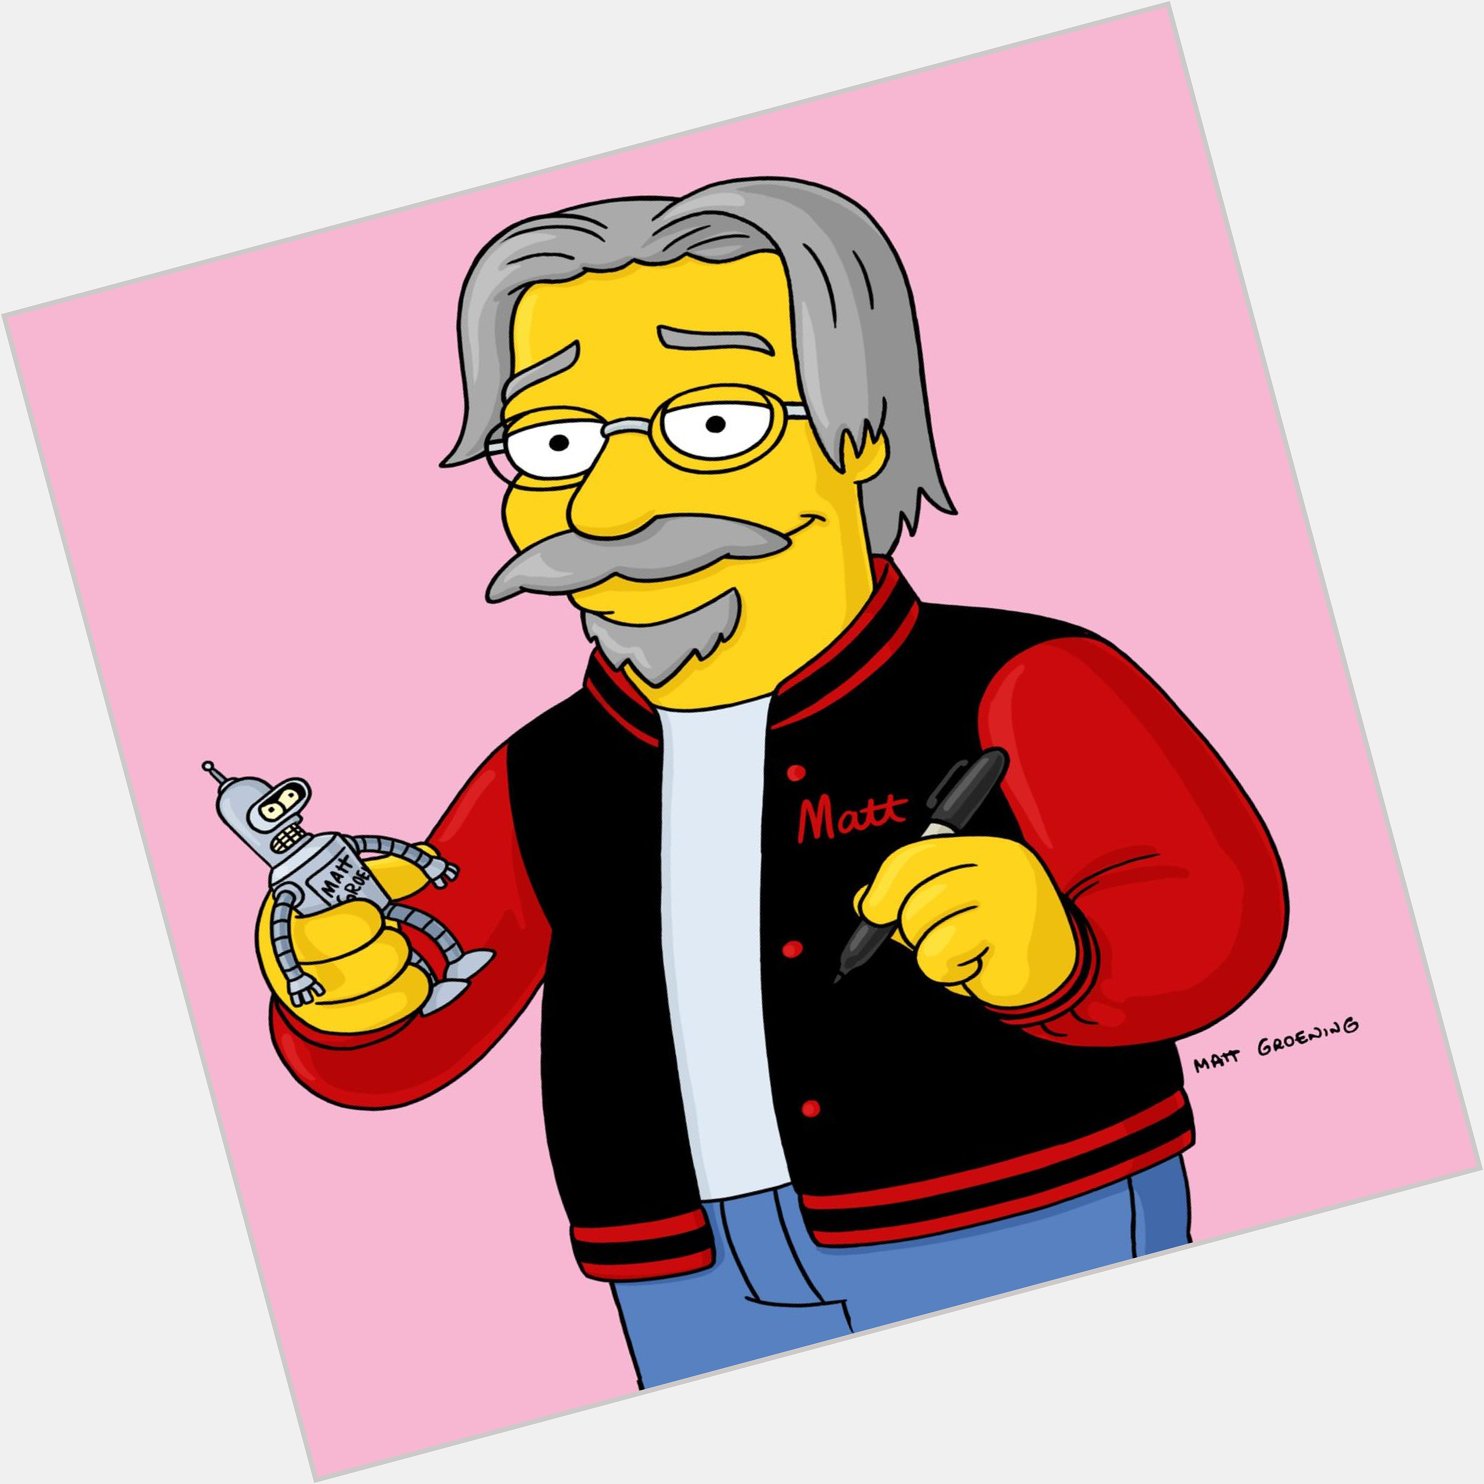 Happy 65th Birthday, Matt Groening!  